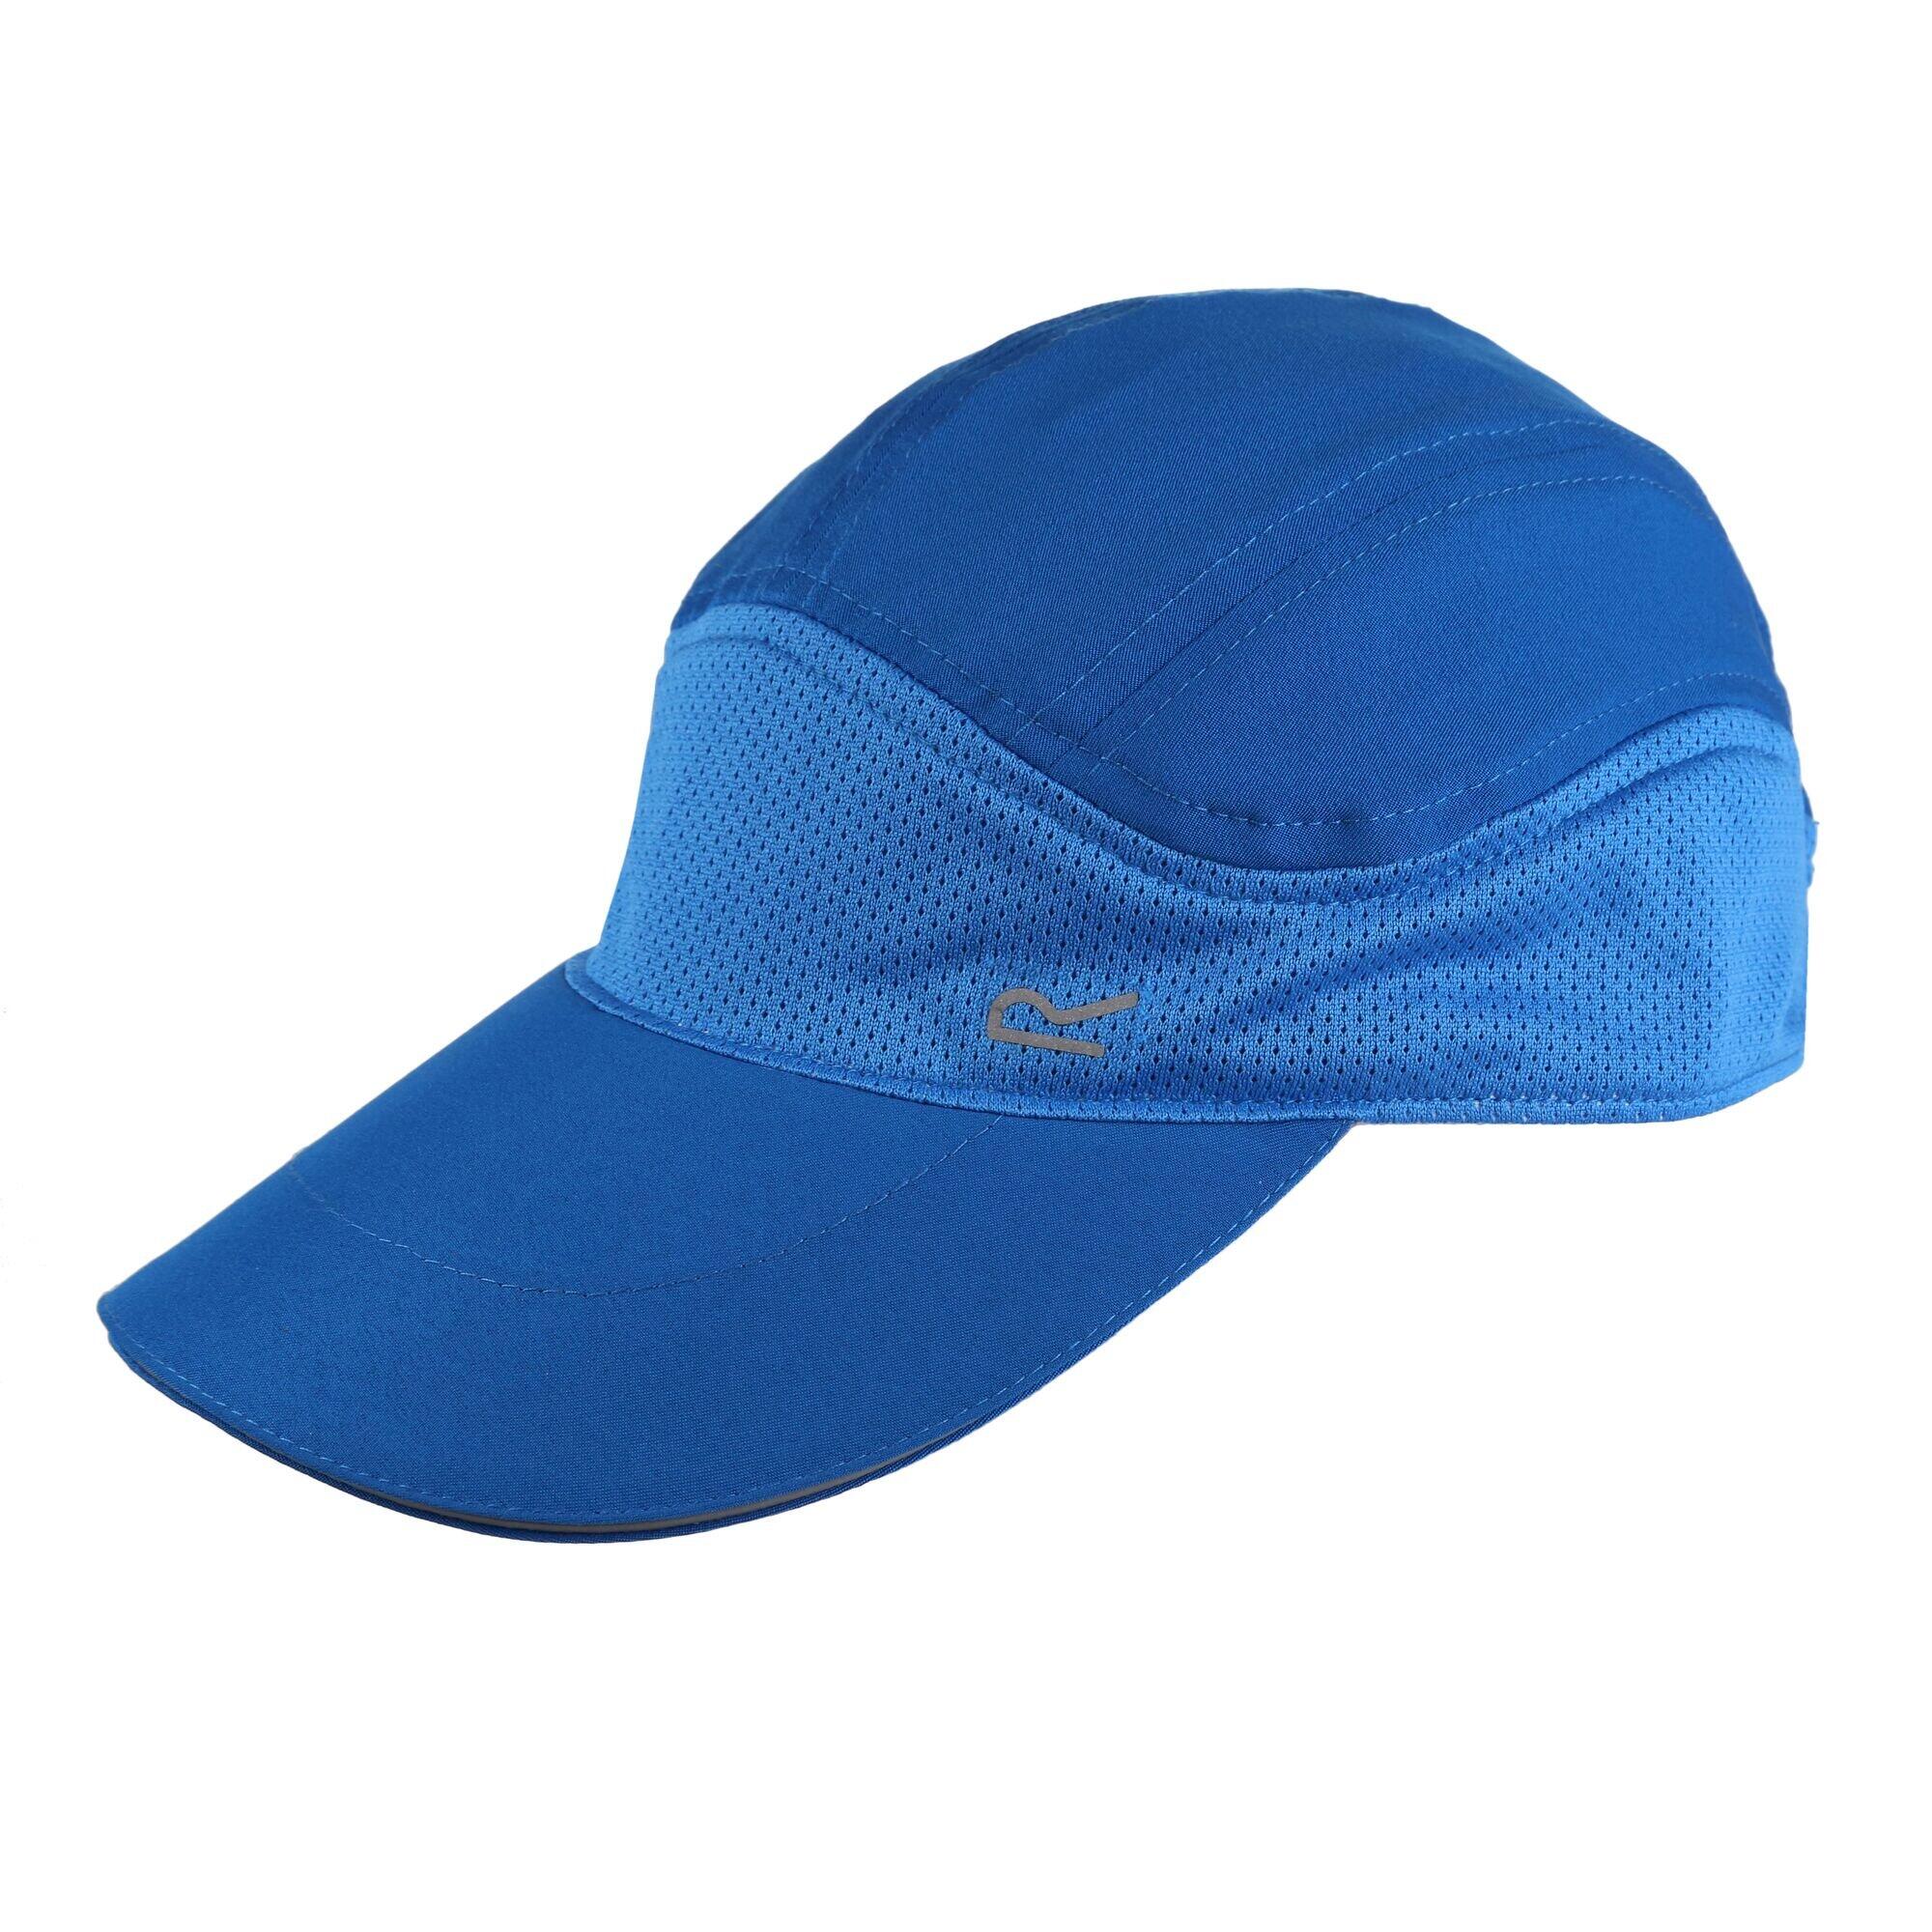 REGATTA Unisex Adult Extended II Baseball Cap (Imperial Blue)